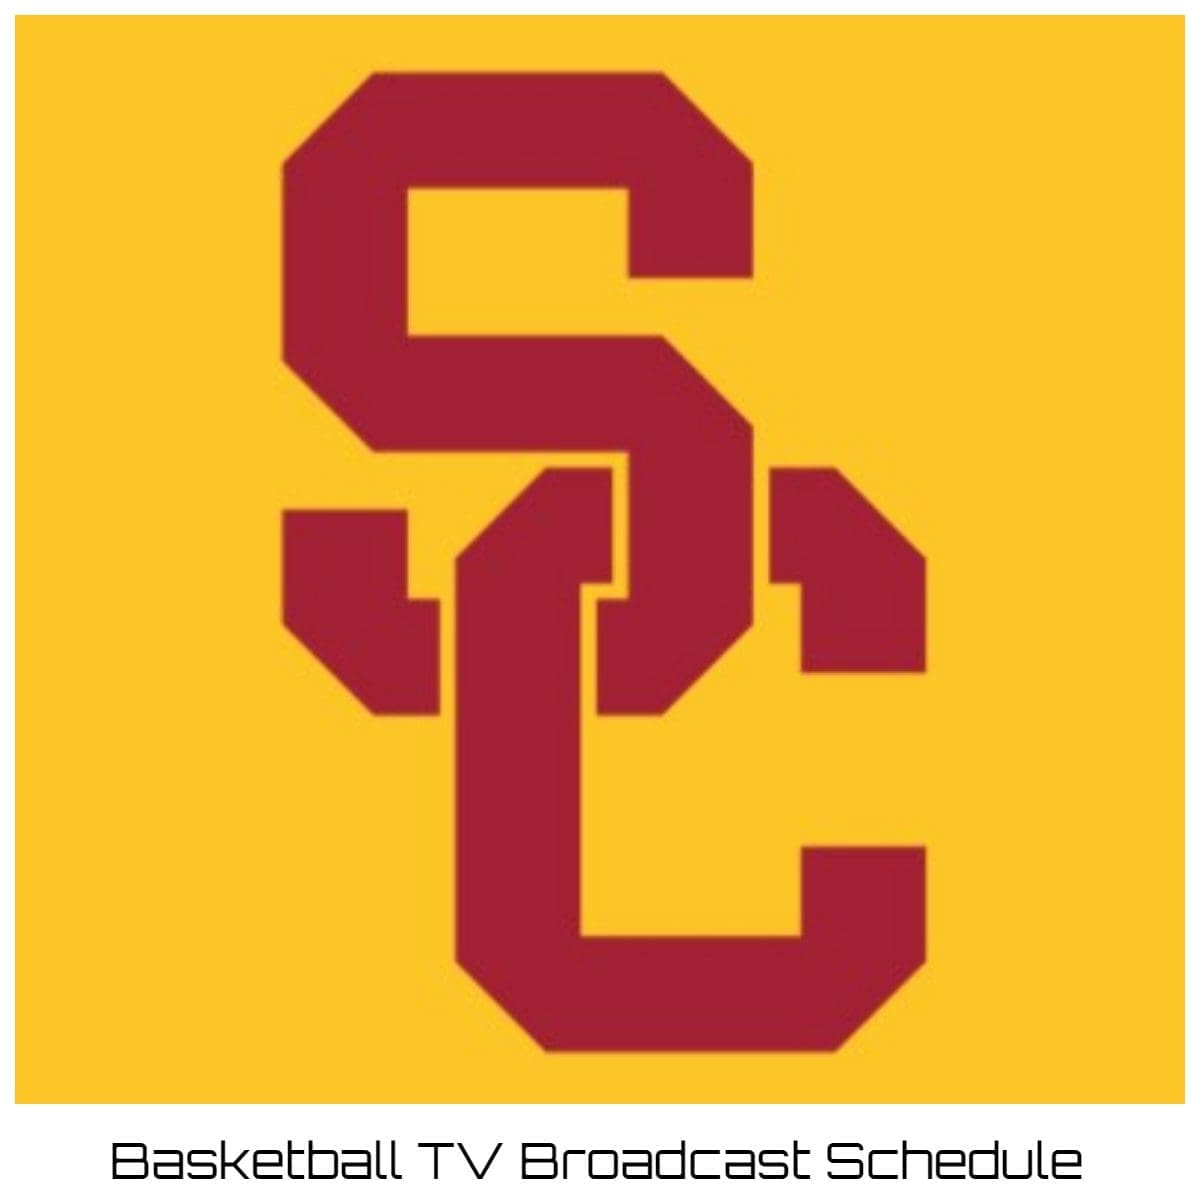 USC Trojans Basketball TV Broadcast Schedule